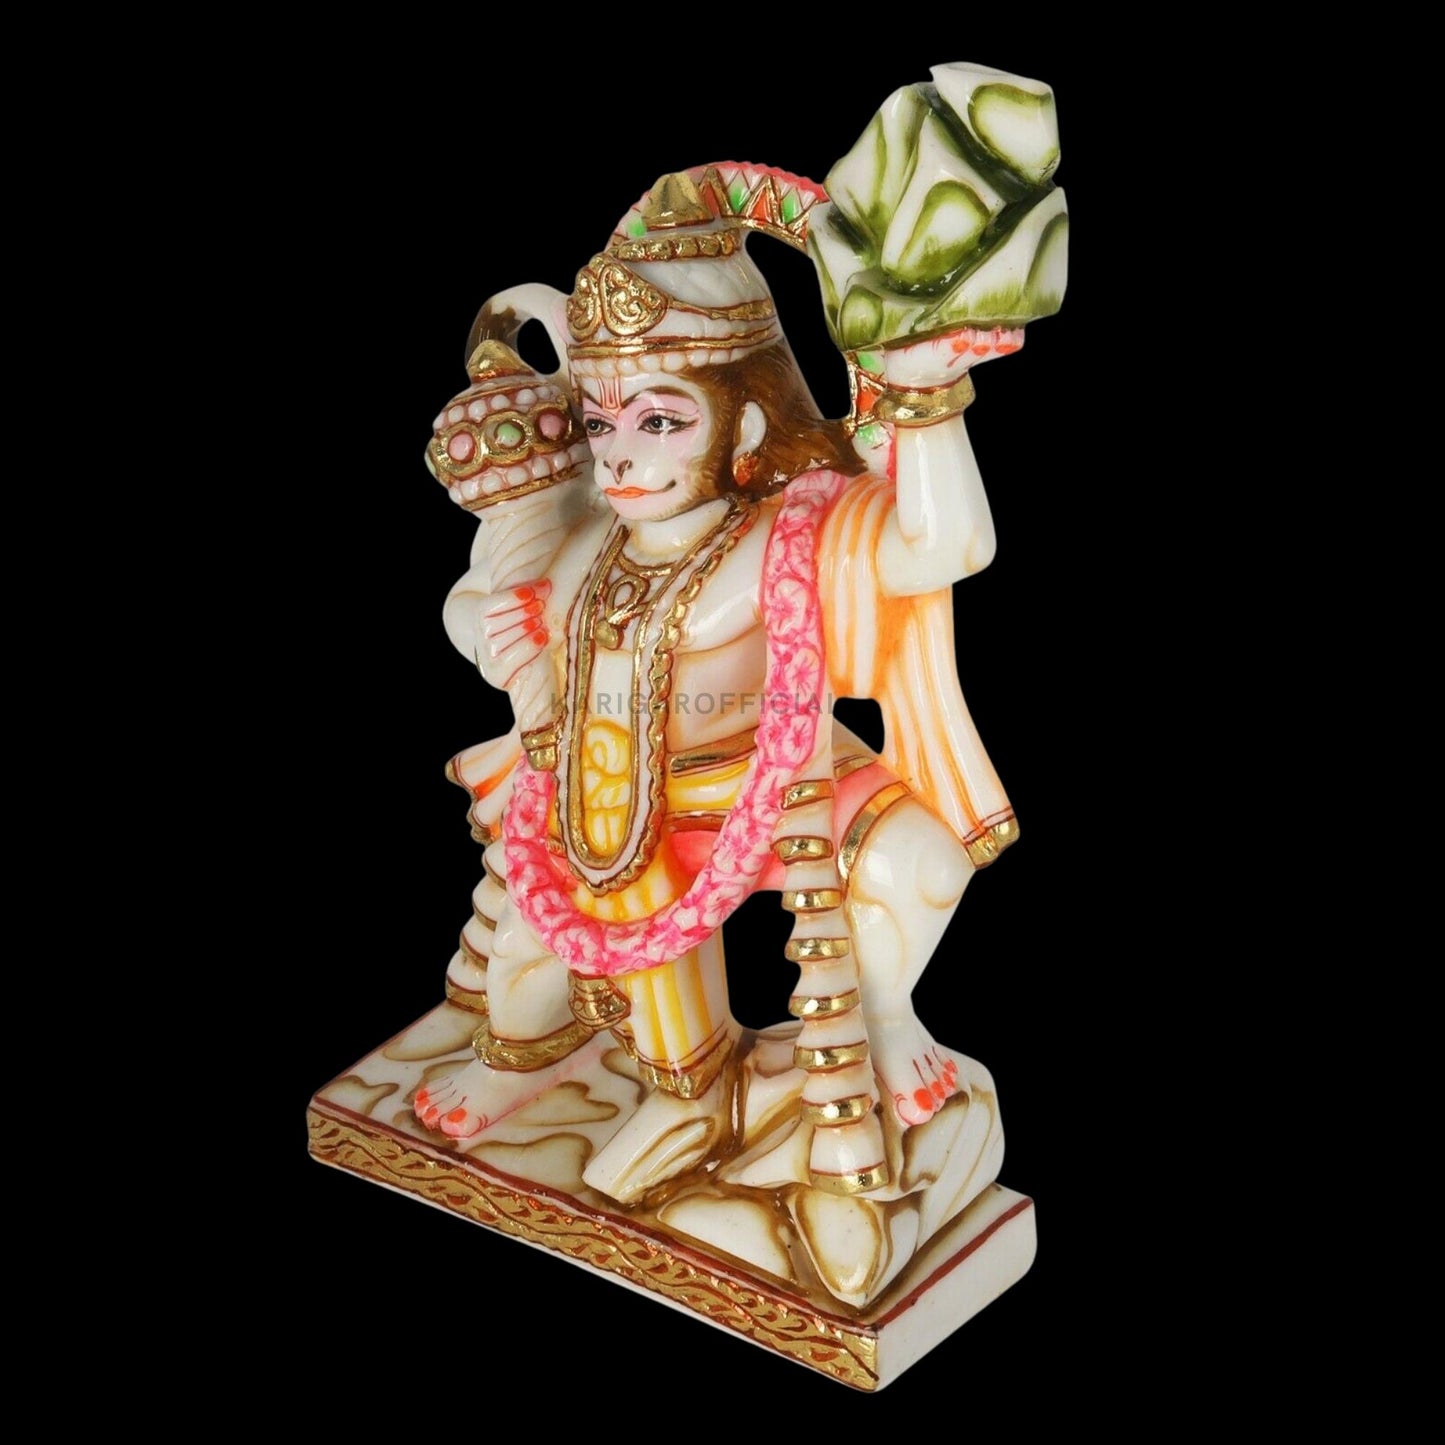 Lord Hanuman Statue, 12 inches Hand Painted Marble Blessing Lord Hanuman Figurine, Hanuman Idol. Hindu Monkey god of Devotion, Strength, Celibacy & Bhakti